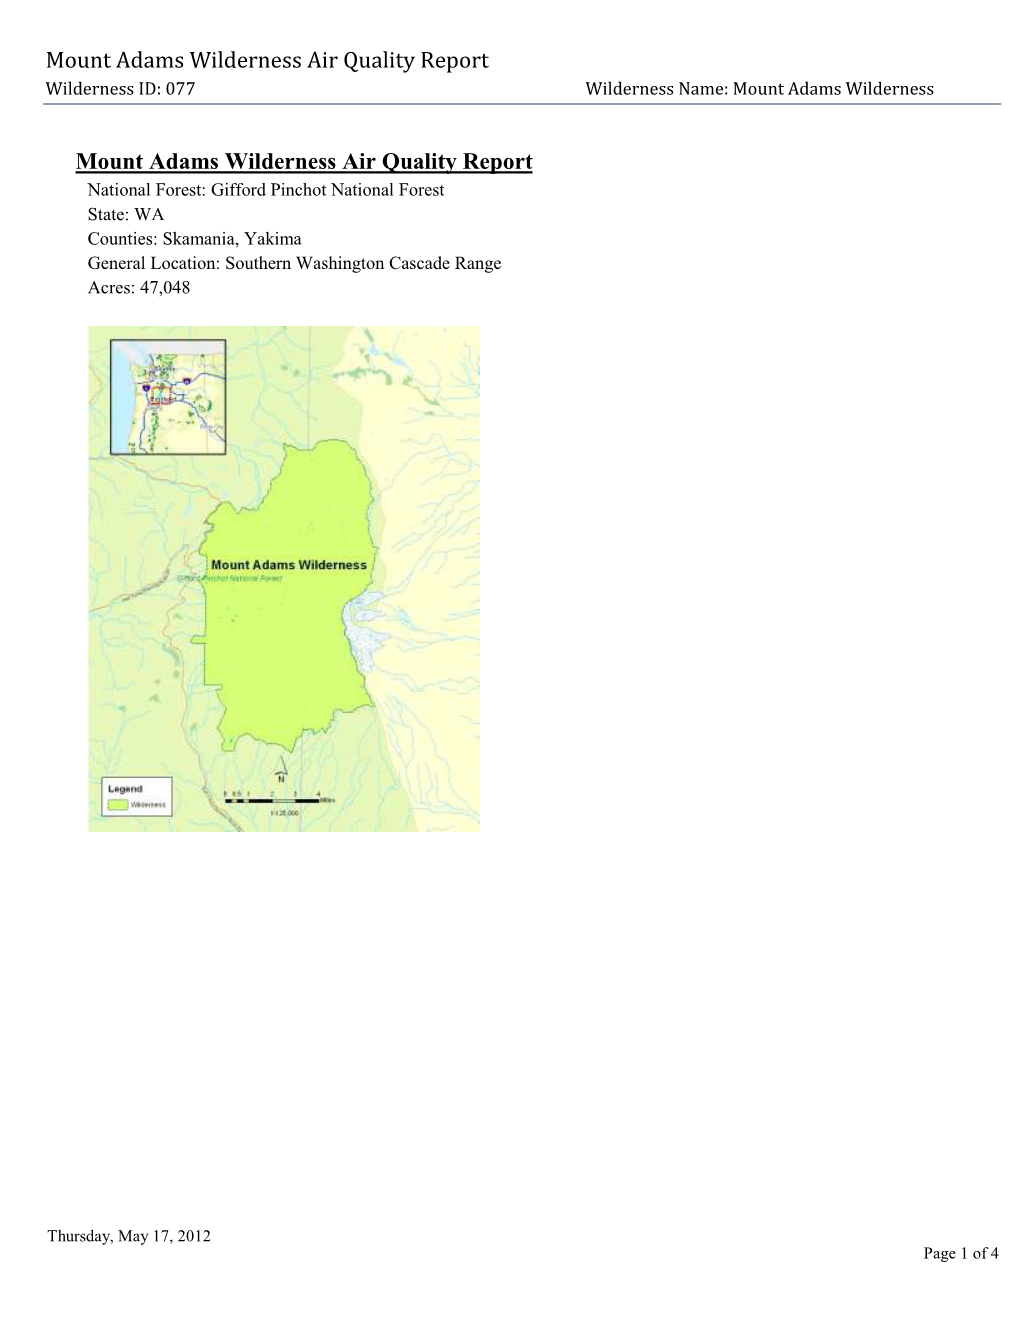 Mount Adams Wilderness Air Quality Report, 2012